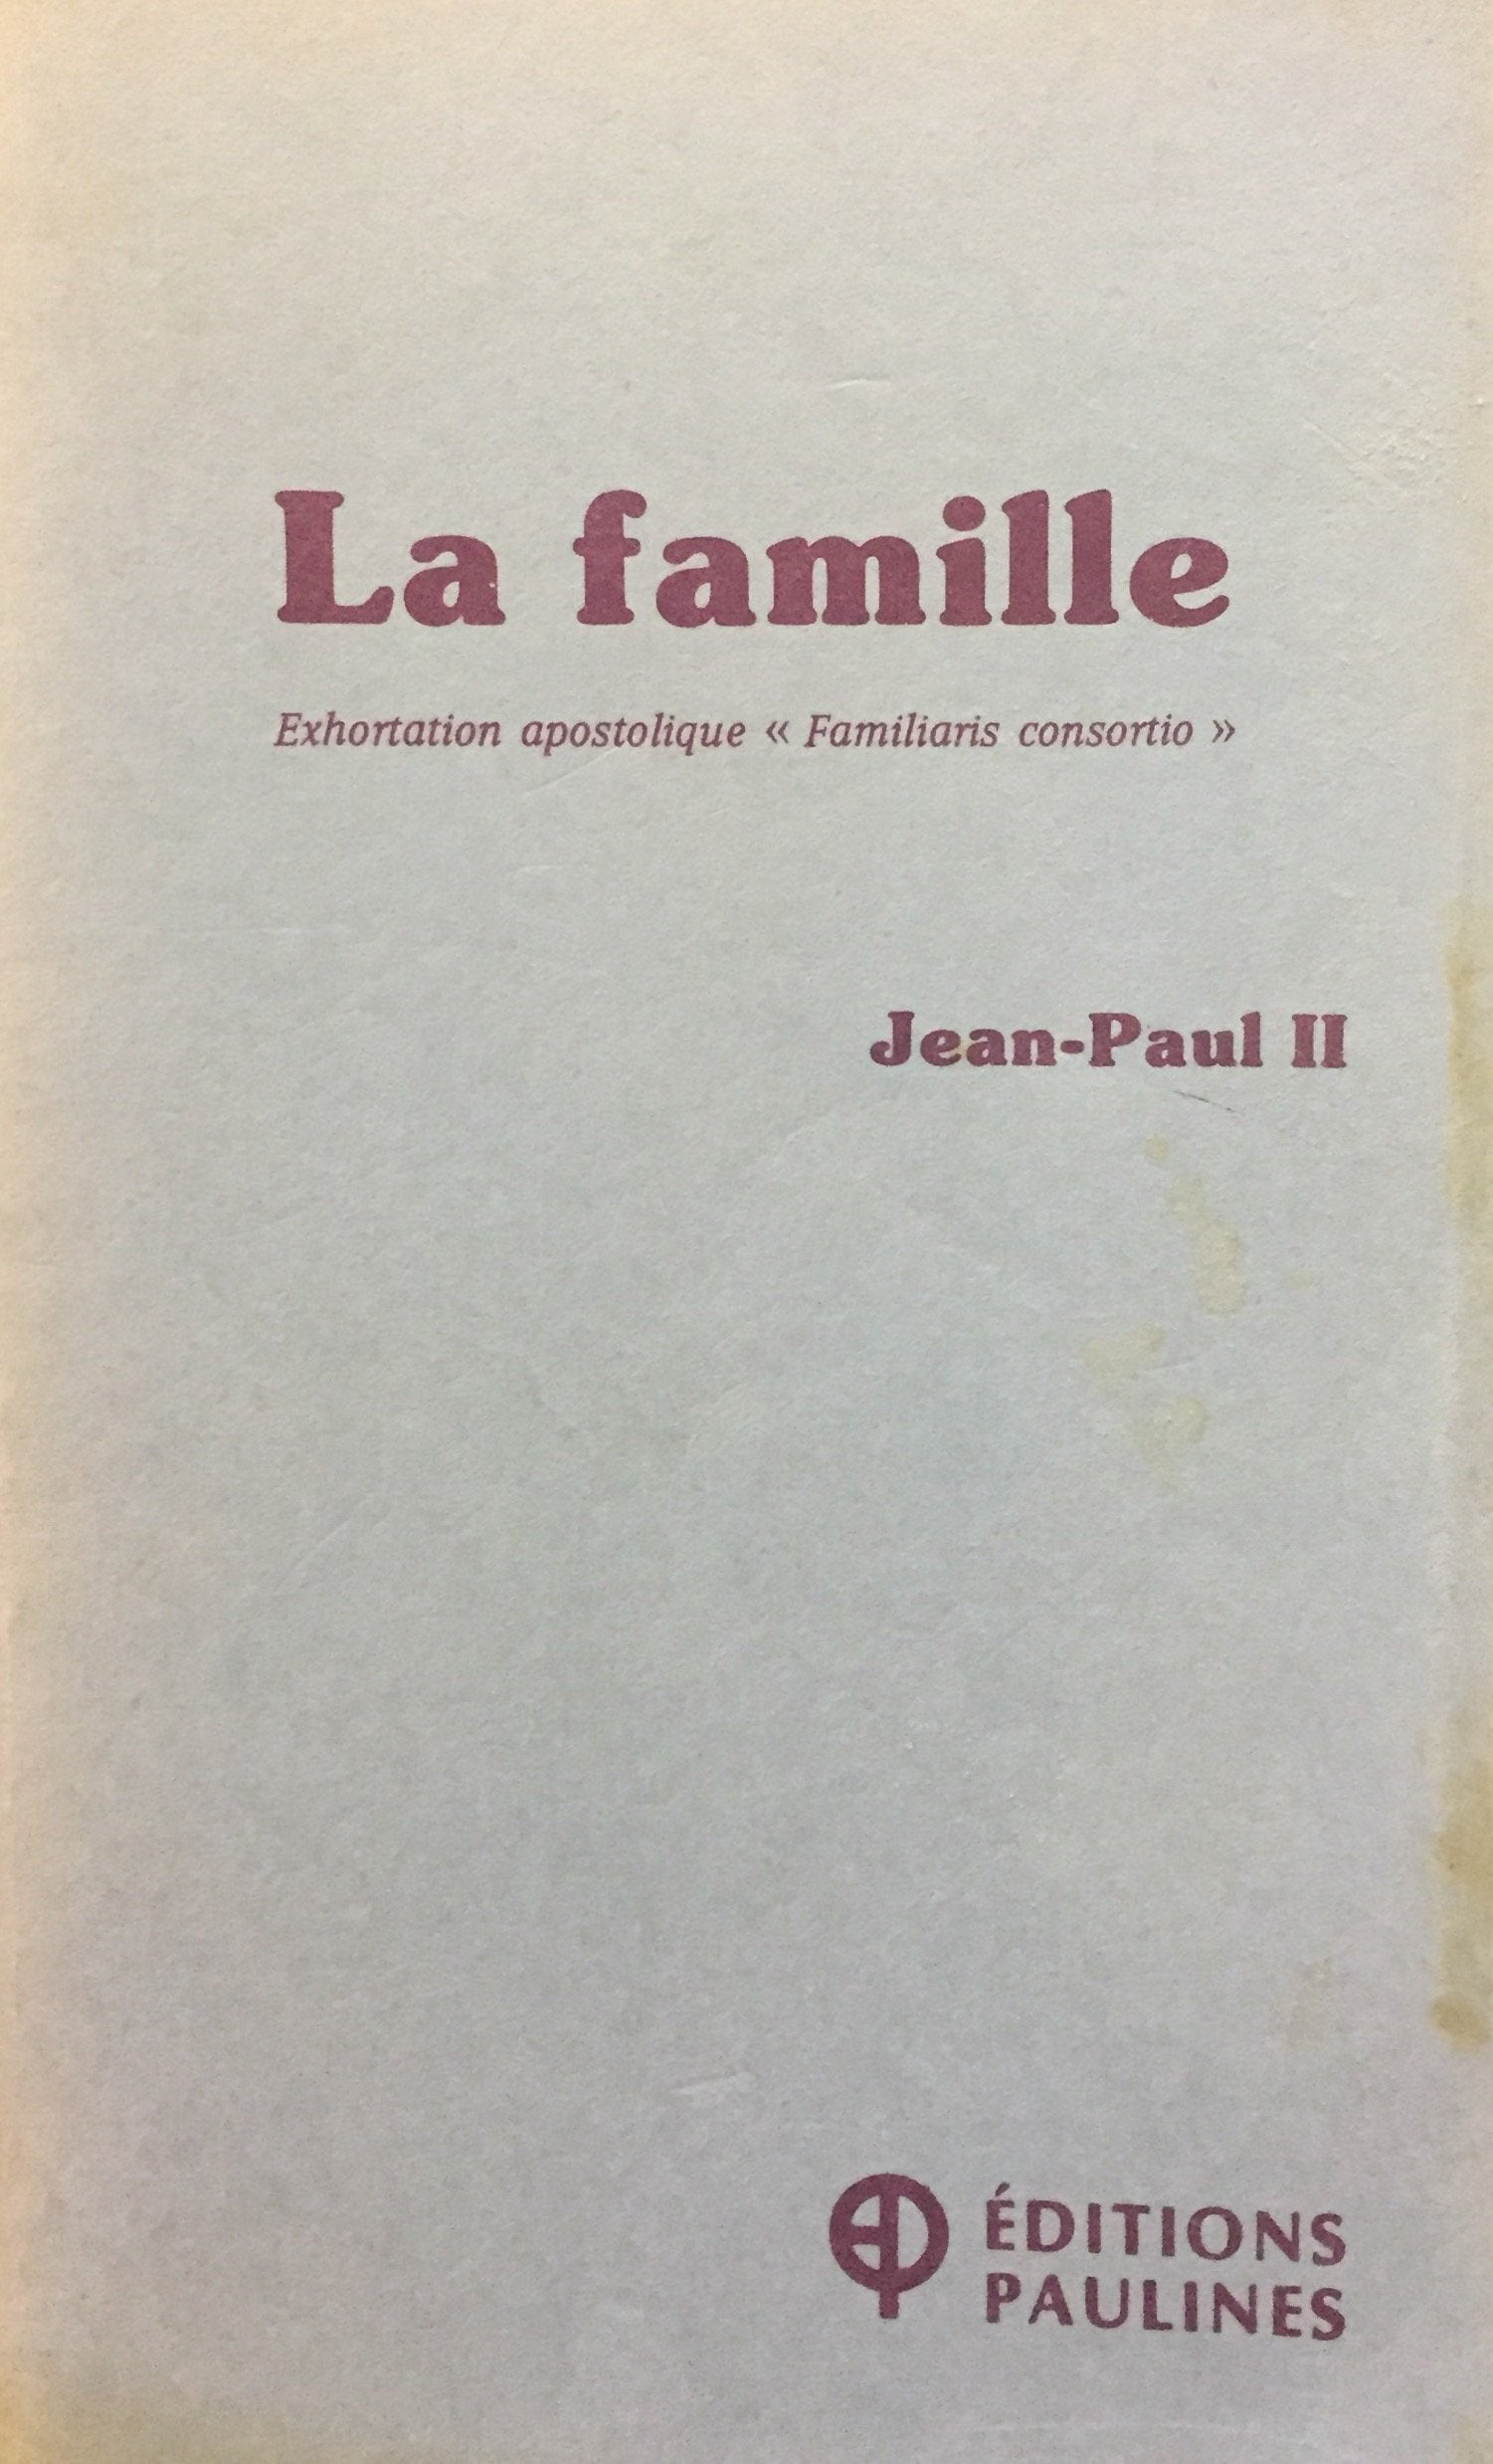 Livre ISBN 289039865X La famille : Exhortation apostolique - Familiaris consortio - (Jean-Paul II)